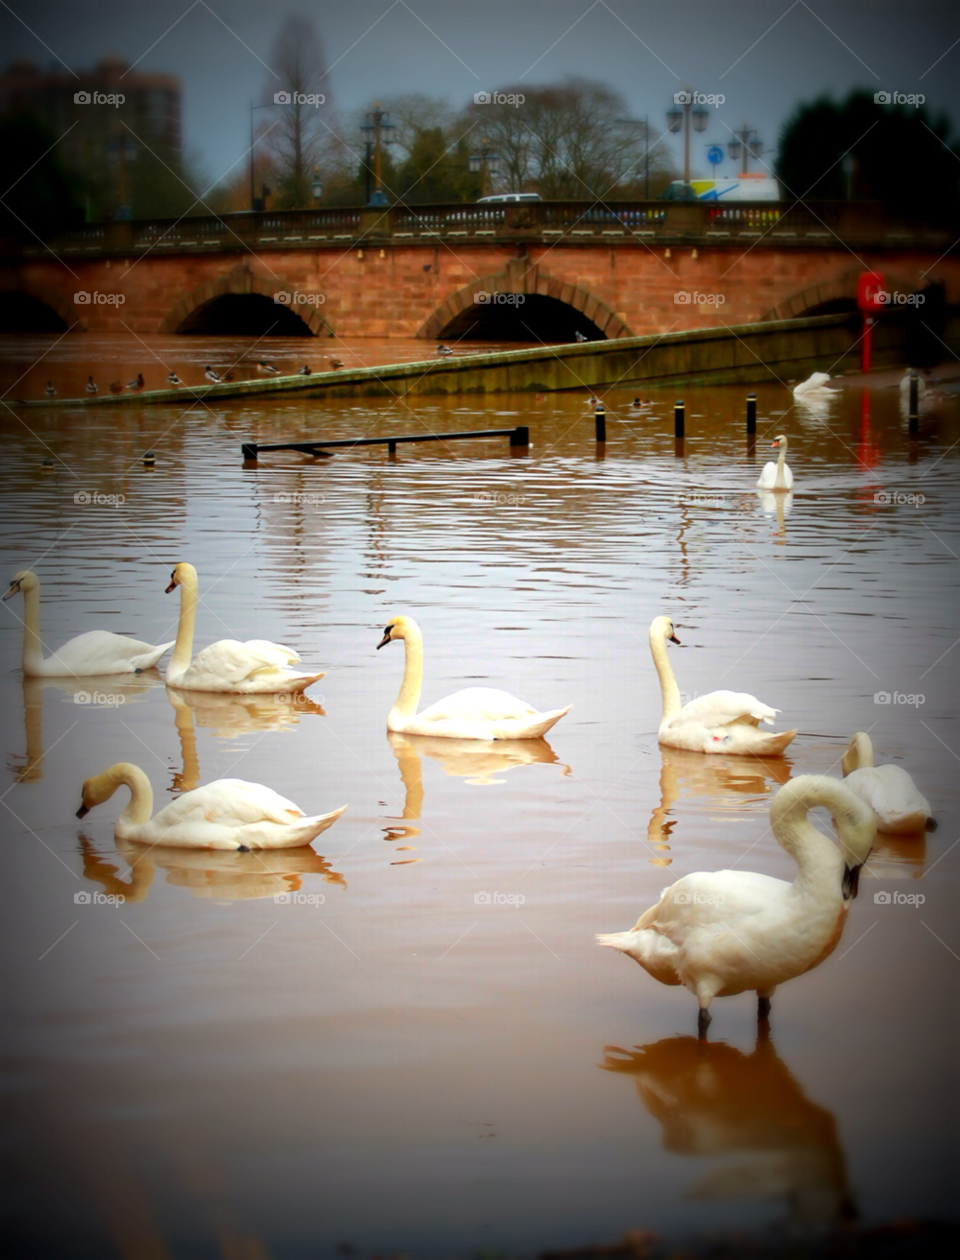 worcester bridge swans floods by OJMitchell